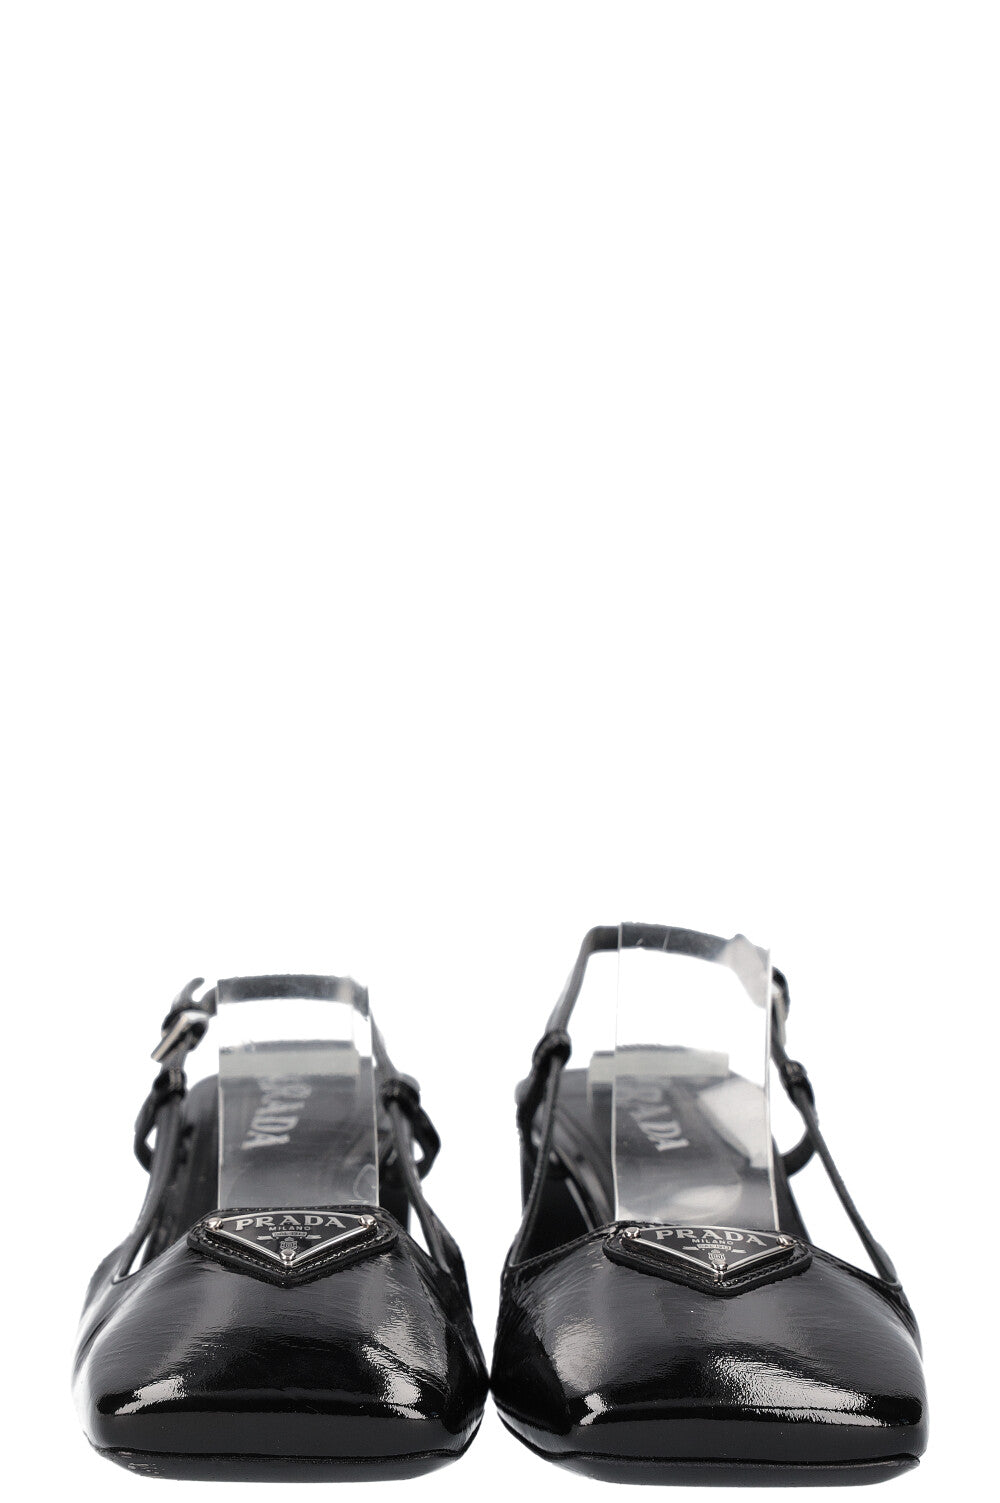 PRADA Logo Slingback Heels Patent Black